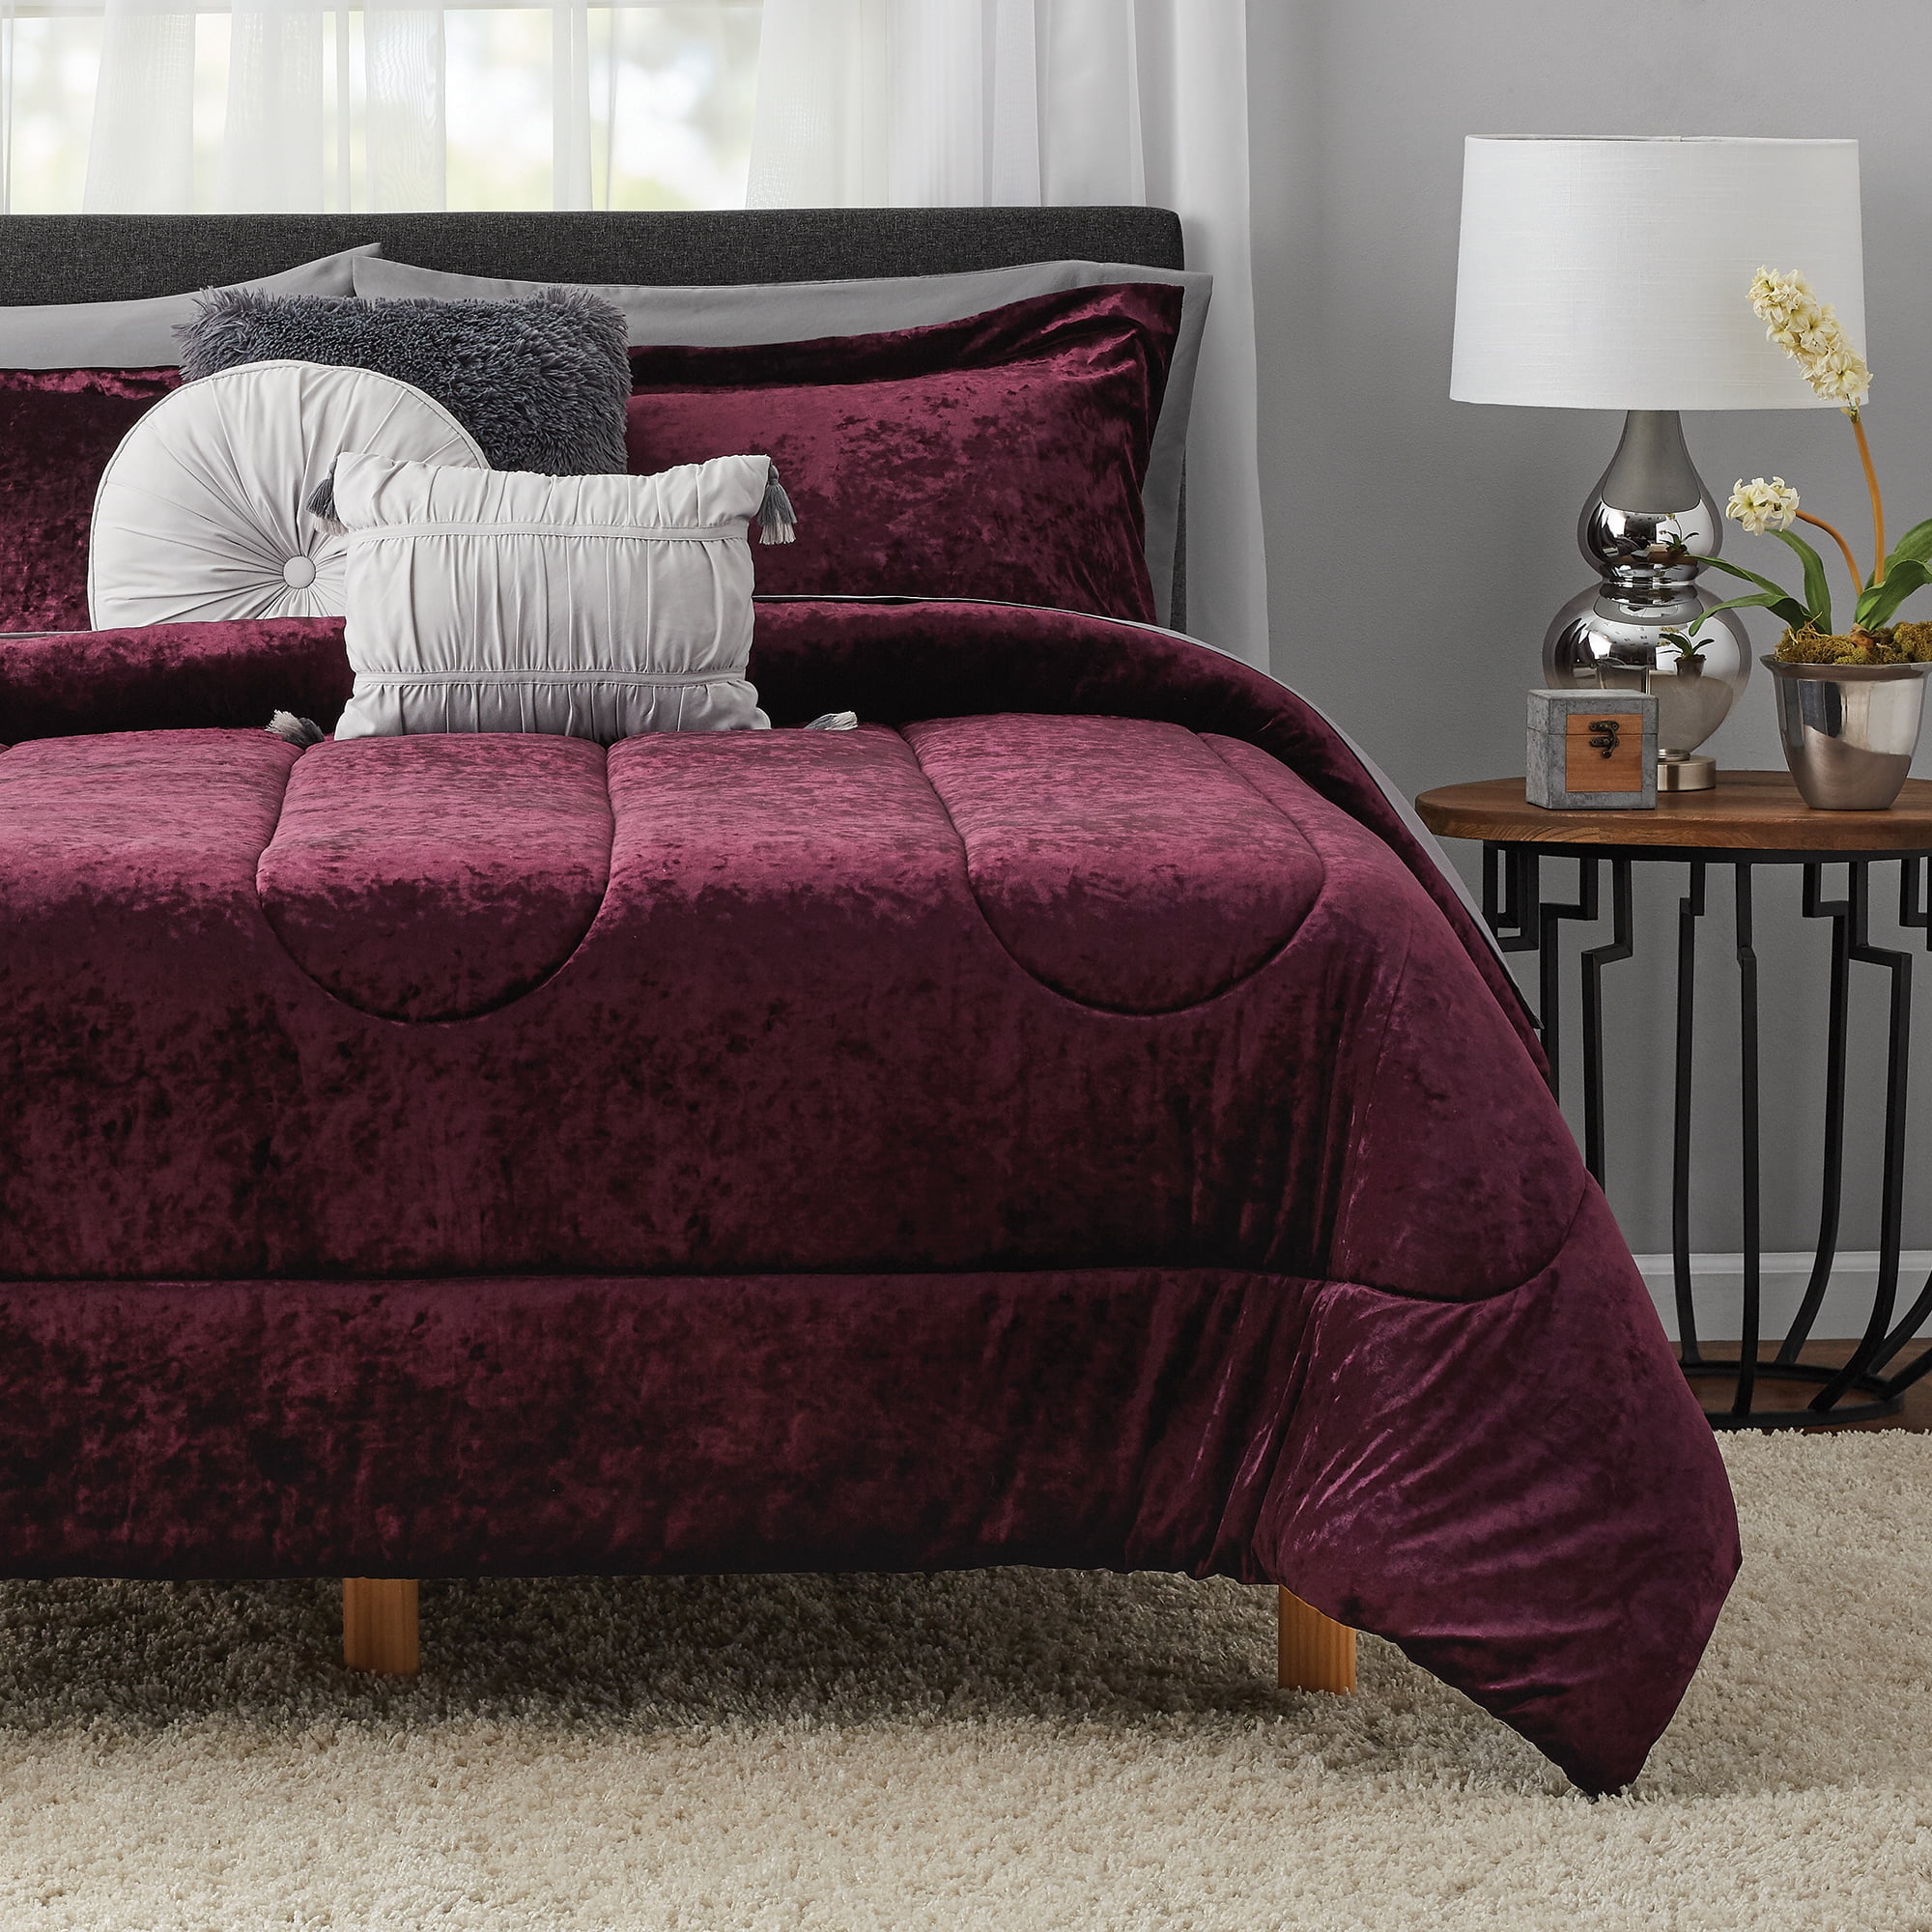 Mainstays Purple Velvet 10 Piece Bed in a Bag Comforter Set With Sheets, Queen